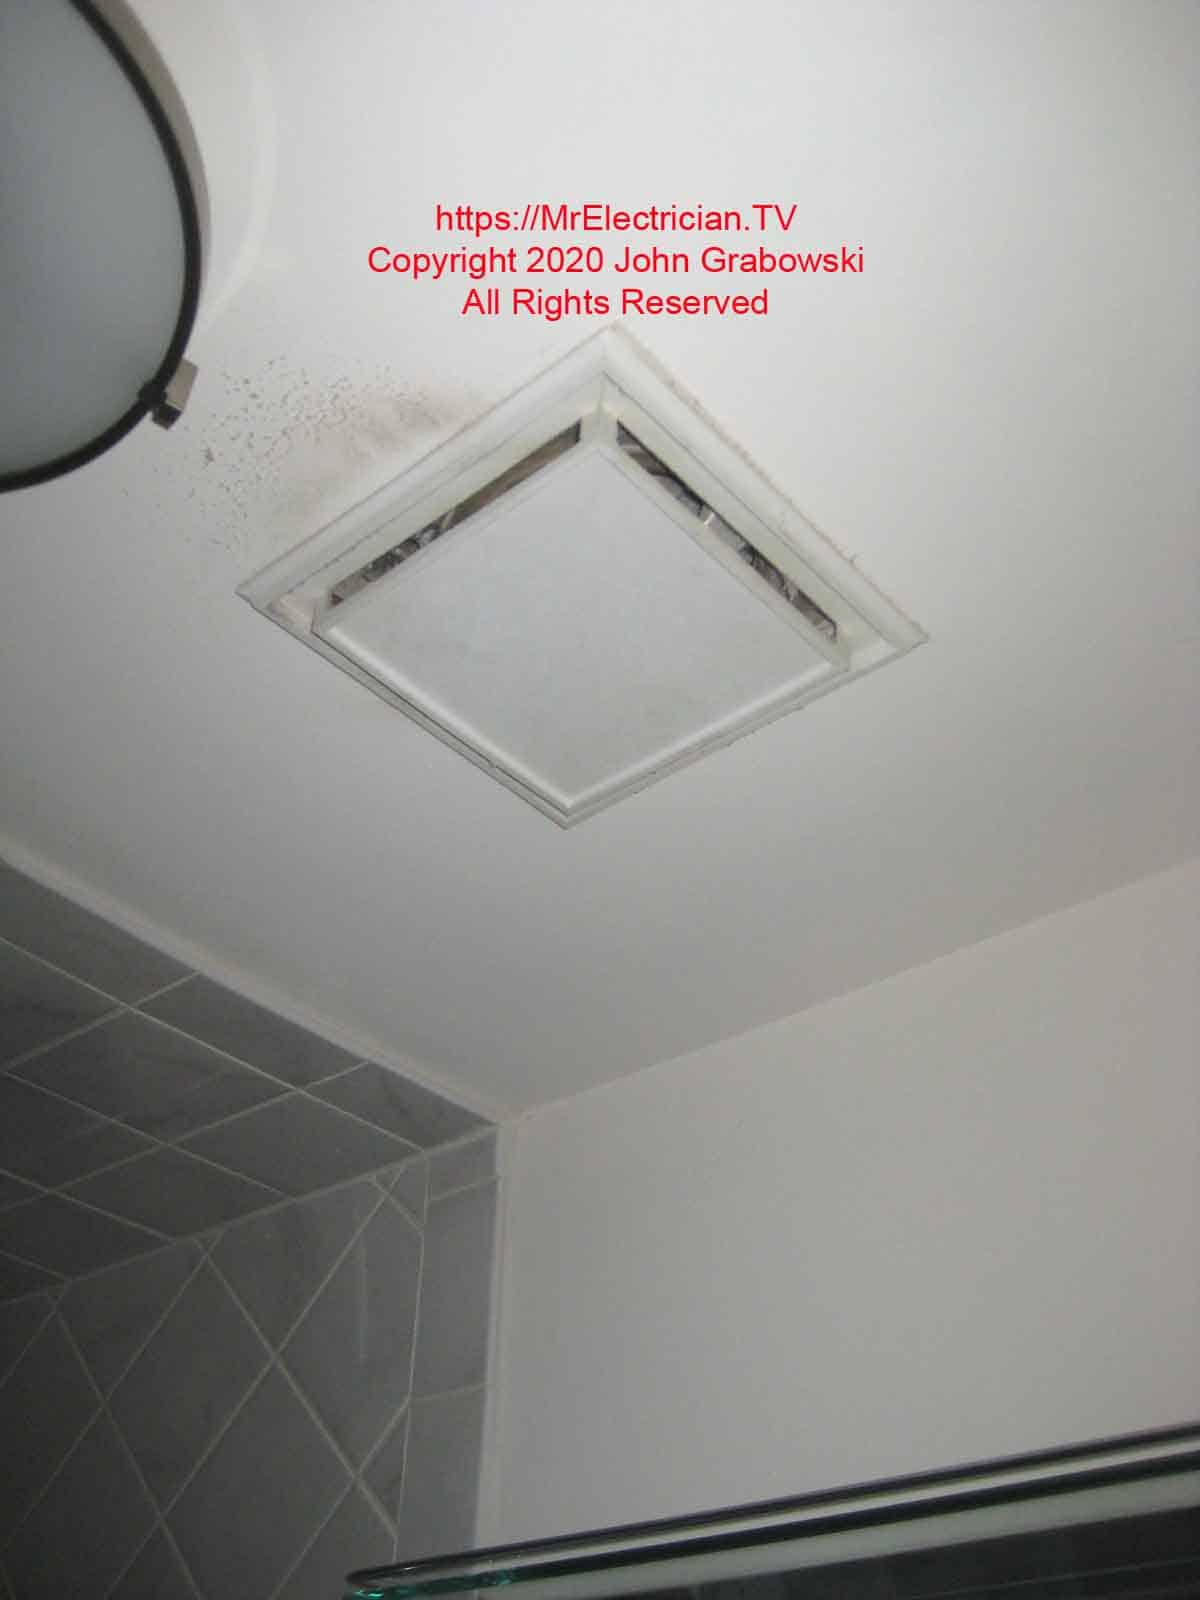 Old bathroom exhaust fan next to ceiling light fixture